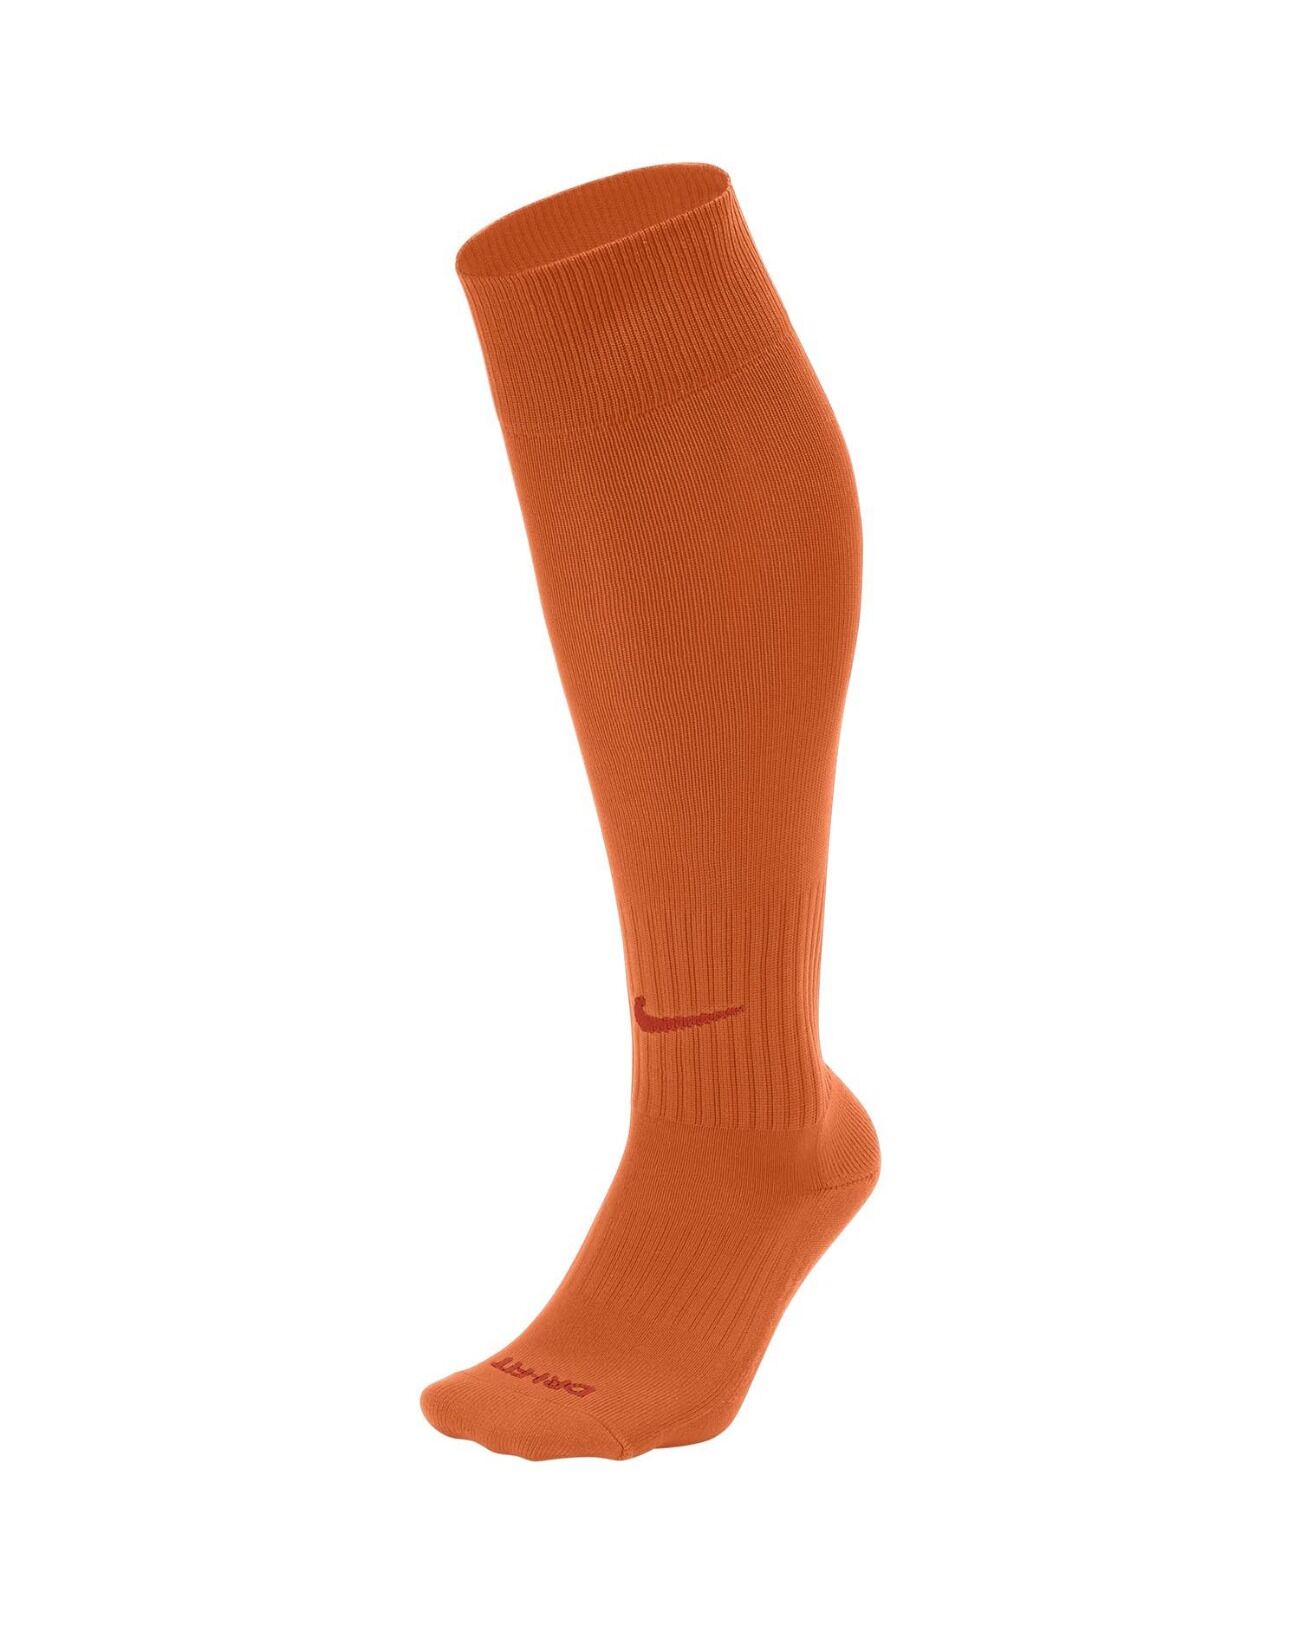 Calcetines Sobre la Pierna Nike Classic II - SX5728-806 - Naranja